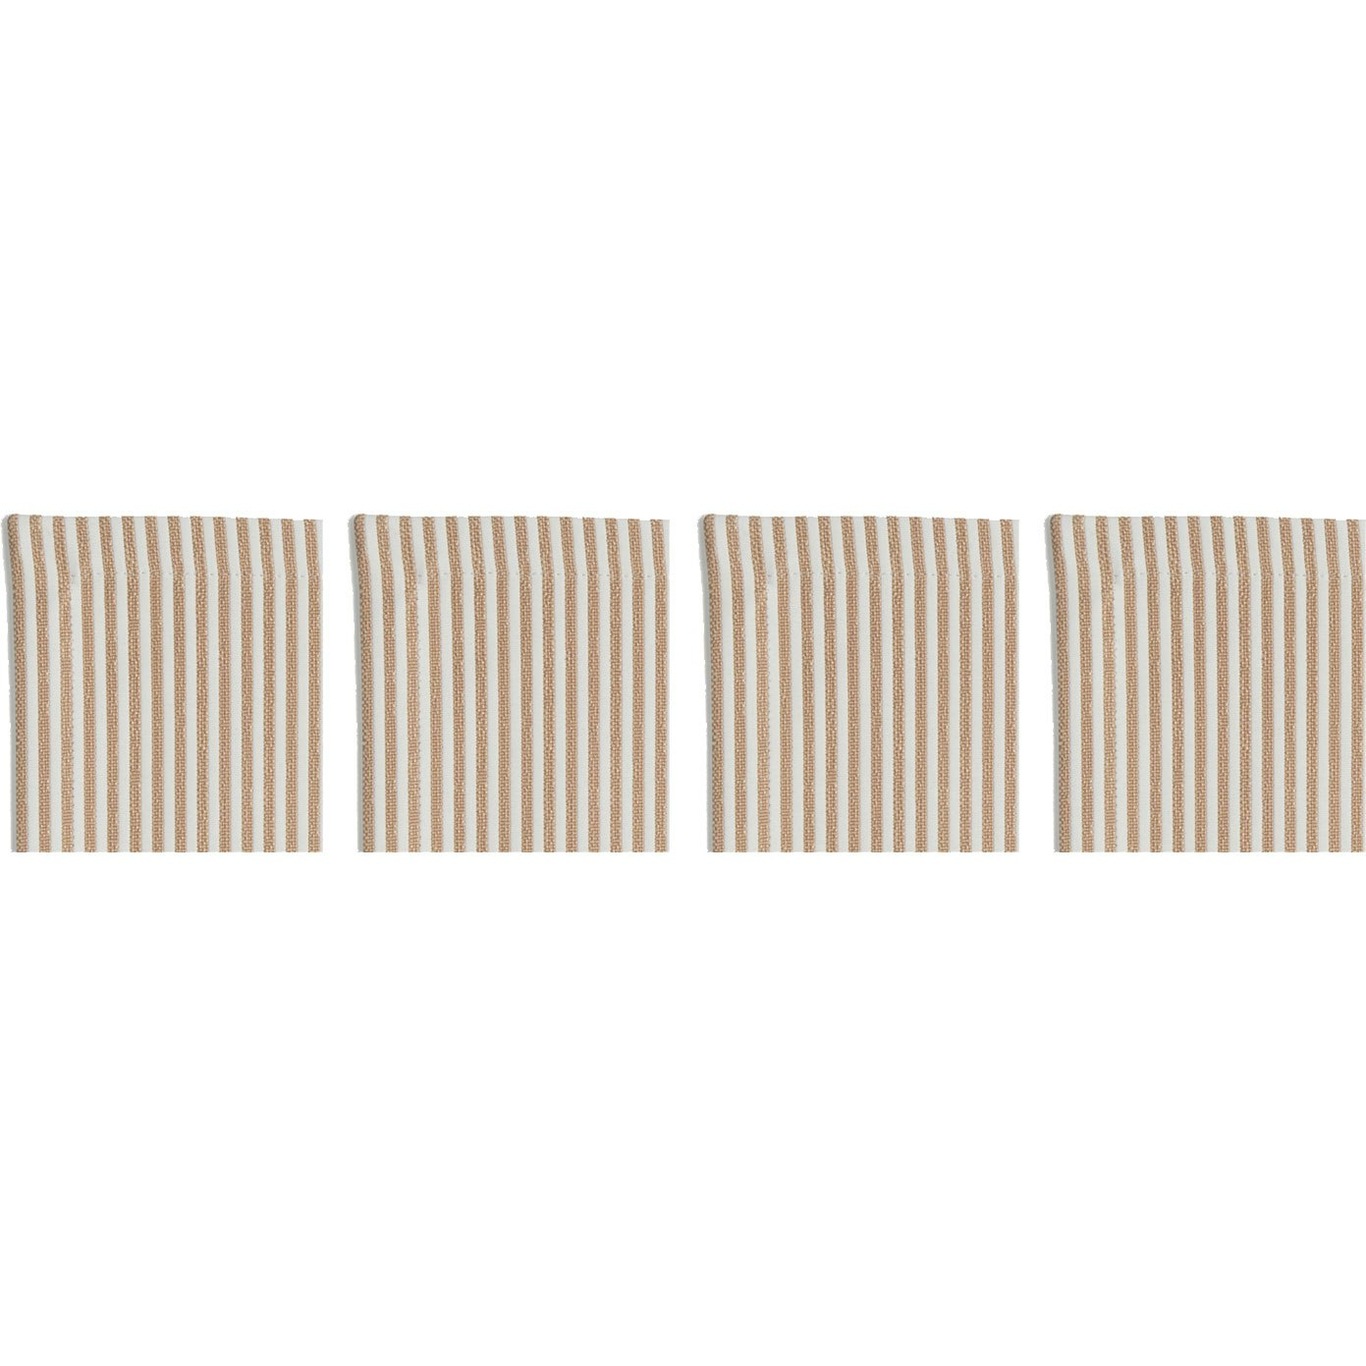 Narrow Stripe Lasinaluset 10x10 cm 4-pakkaus, Beige